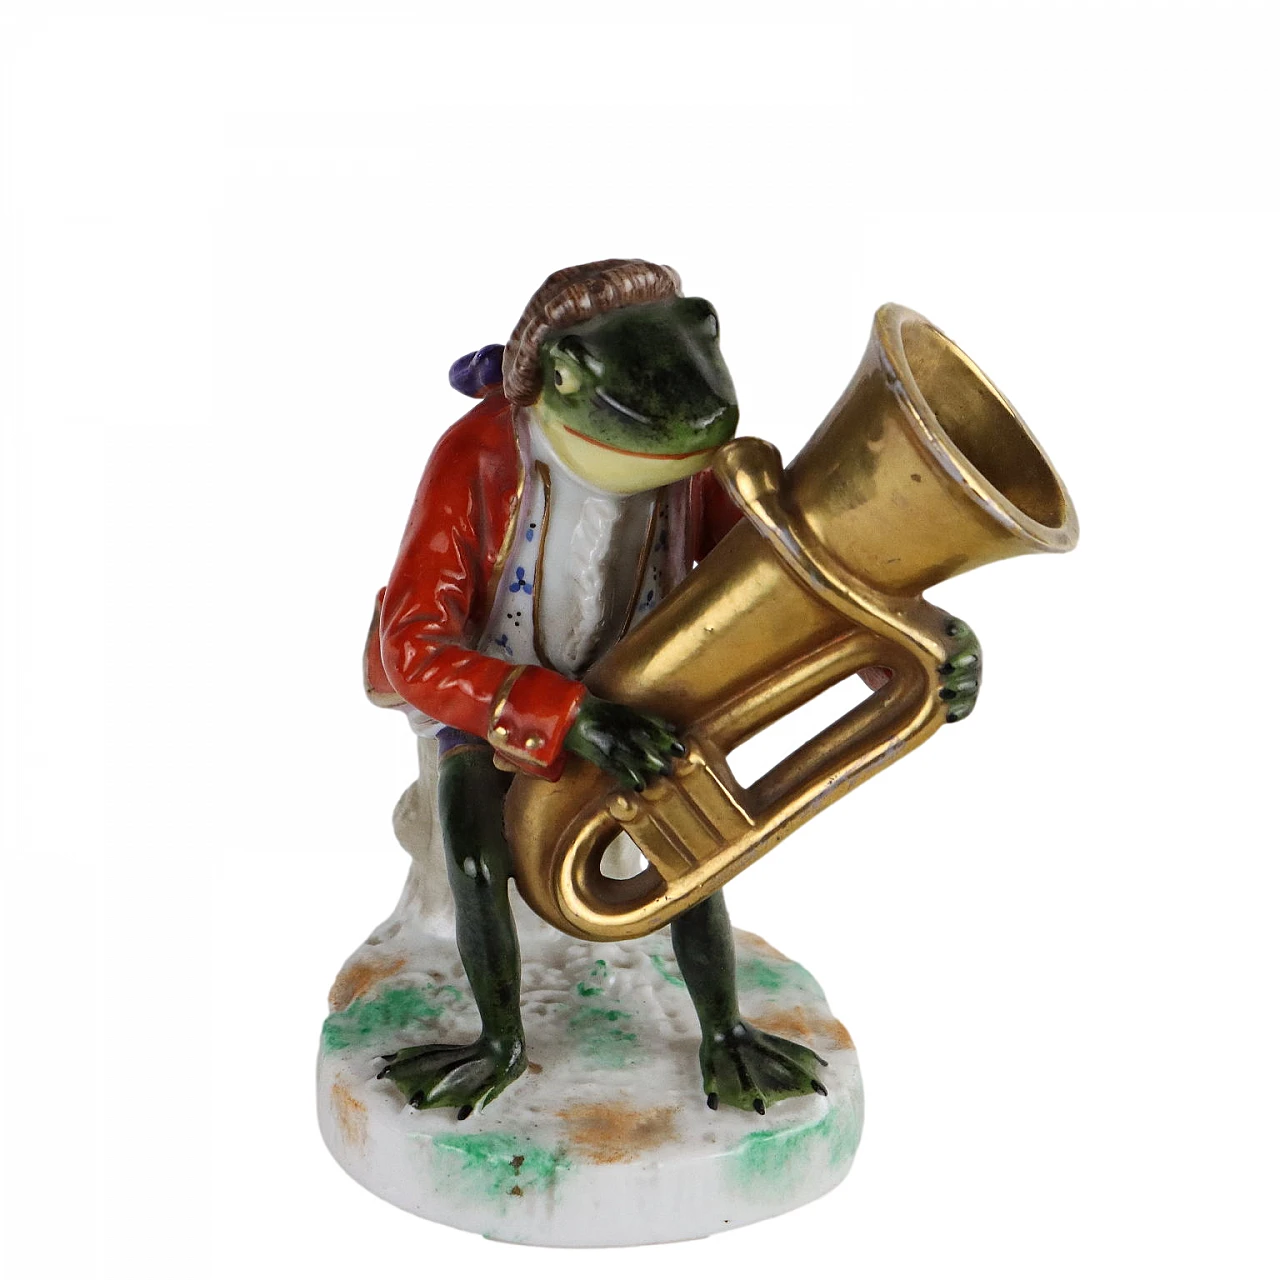 Sitzendorf porcelain figurine of frog with trombone, 19th century 1